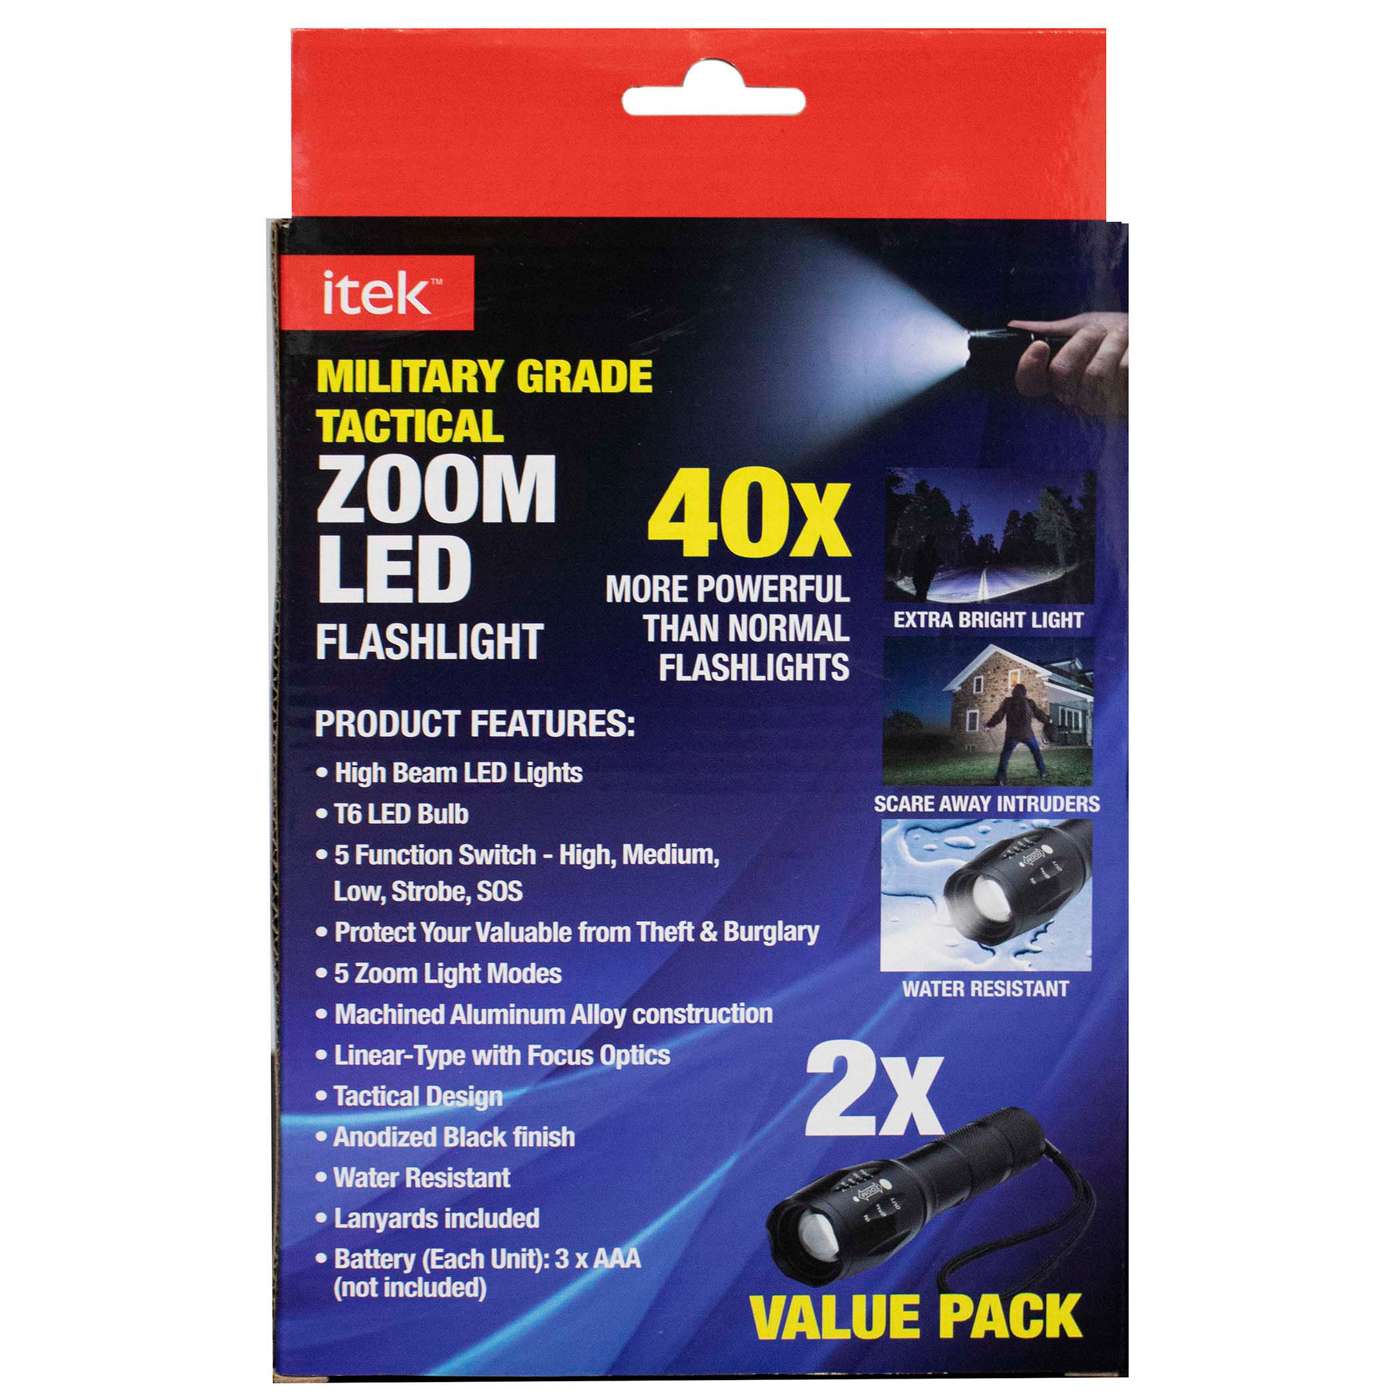 Itek Military Grade Tactical Zoom LED Flashlight; image 2 of 2